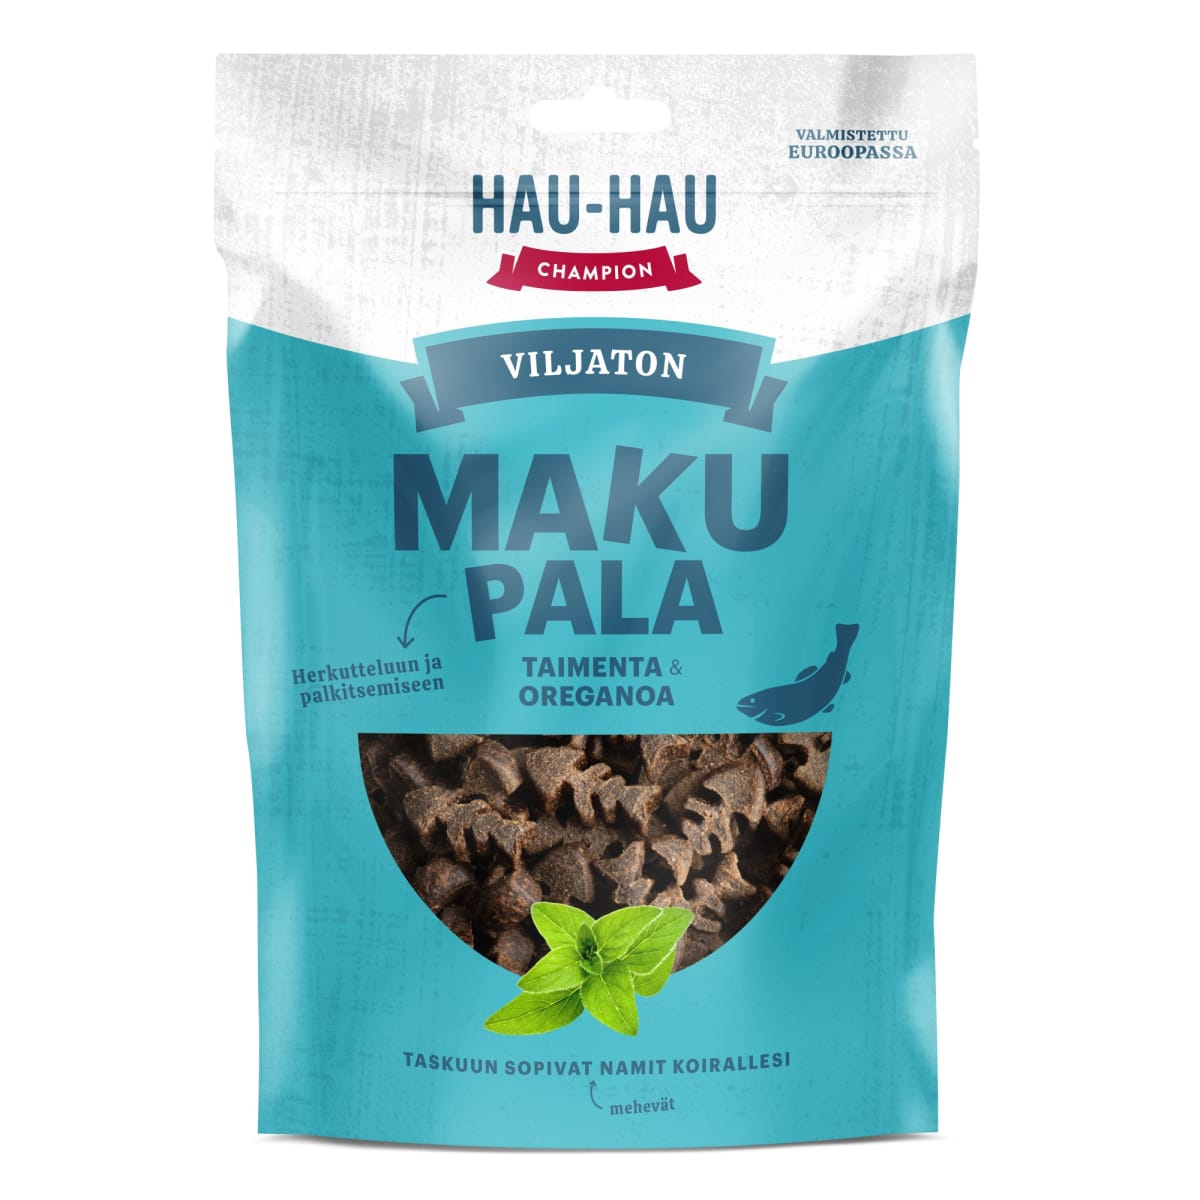 Hau-Hau Champion Viljaton Makupala taimen-oregano 200 g koiran herkku |   verkkokauppa